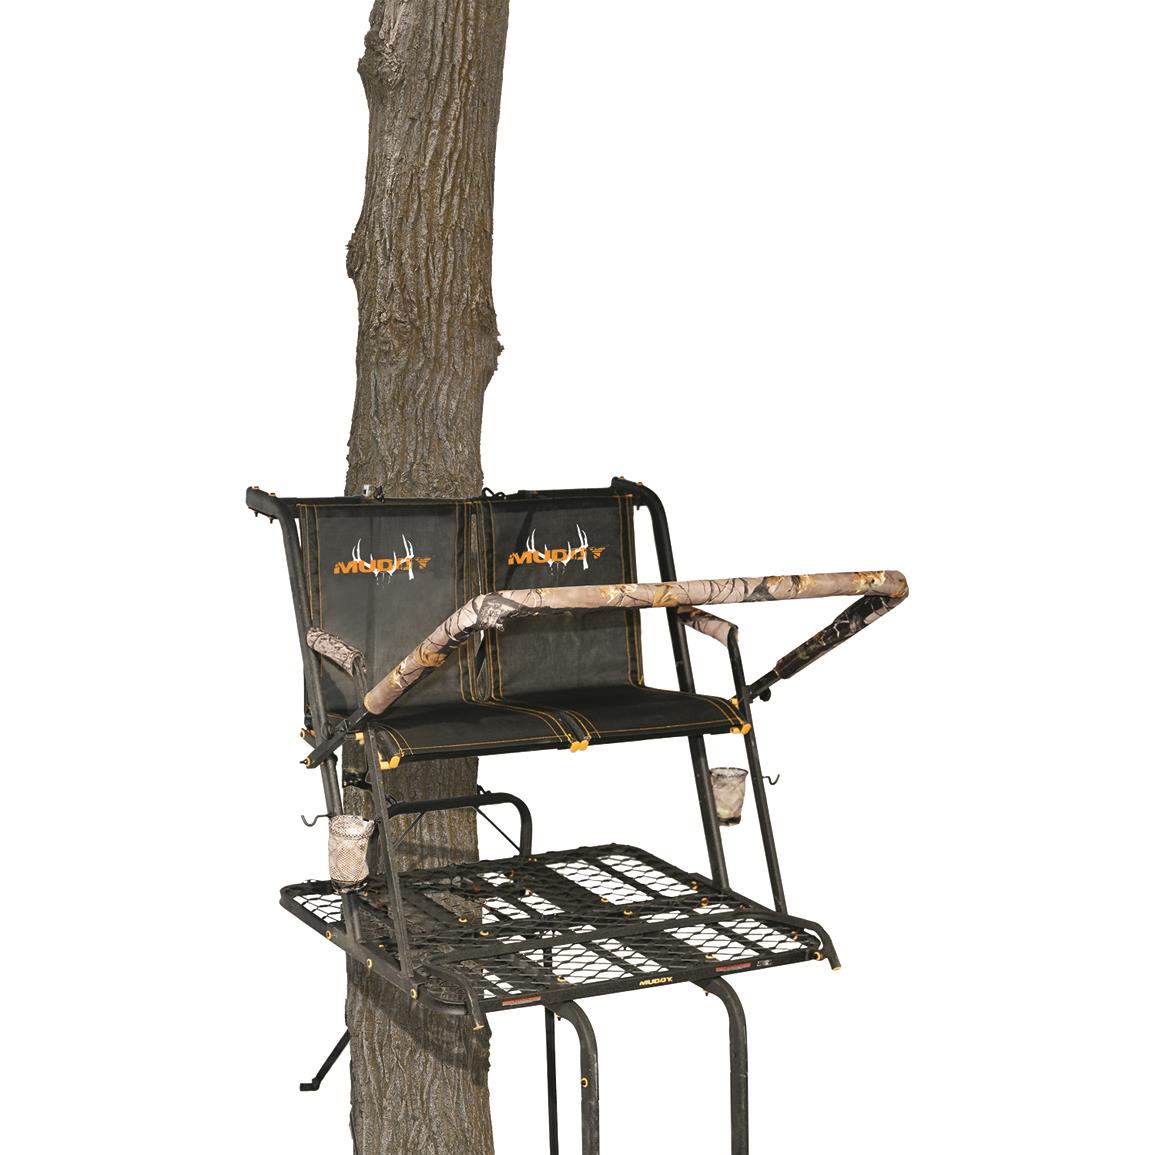 Muddy Nexus XTL 20' 2man Ladder Tree Stand 705518, Ladder Tree Stands at Sportsman's Guide